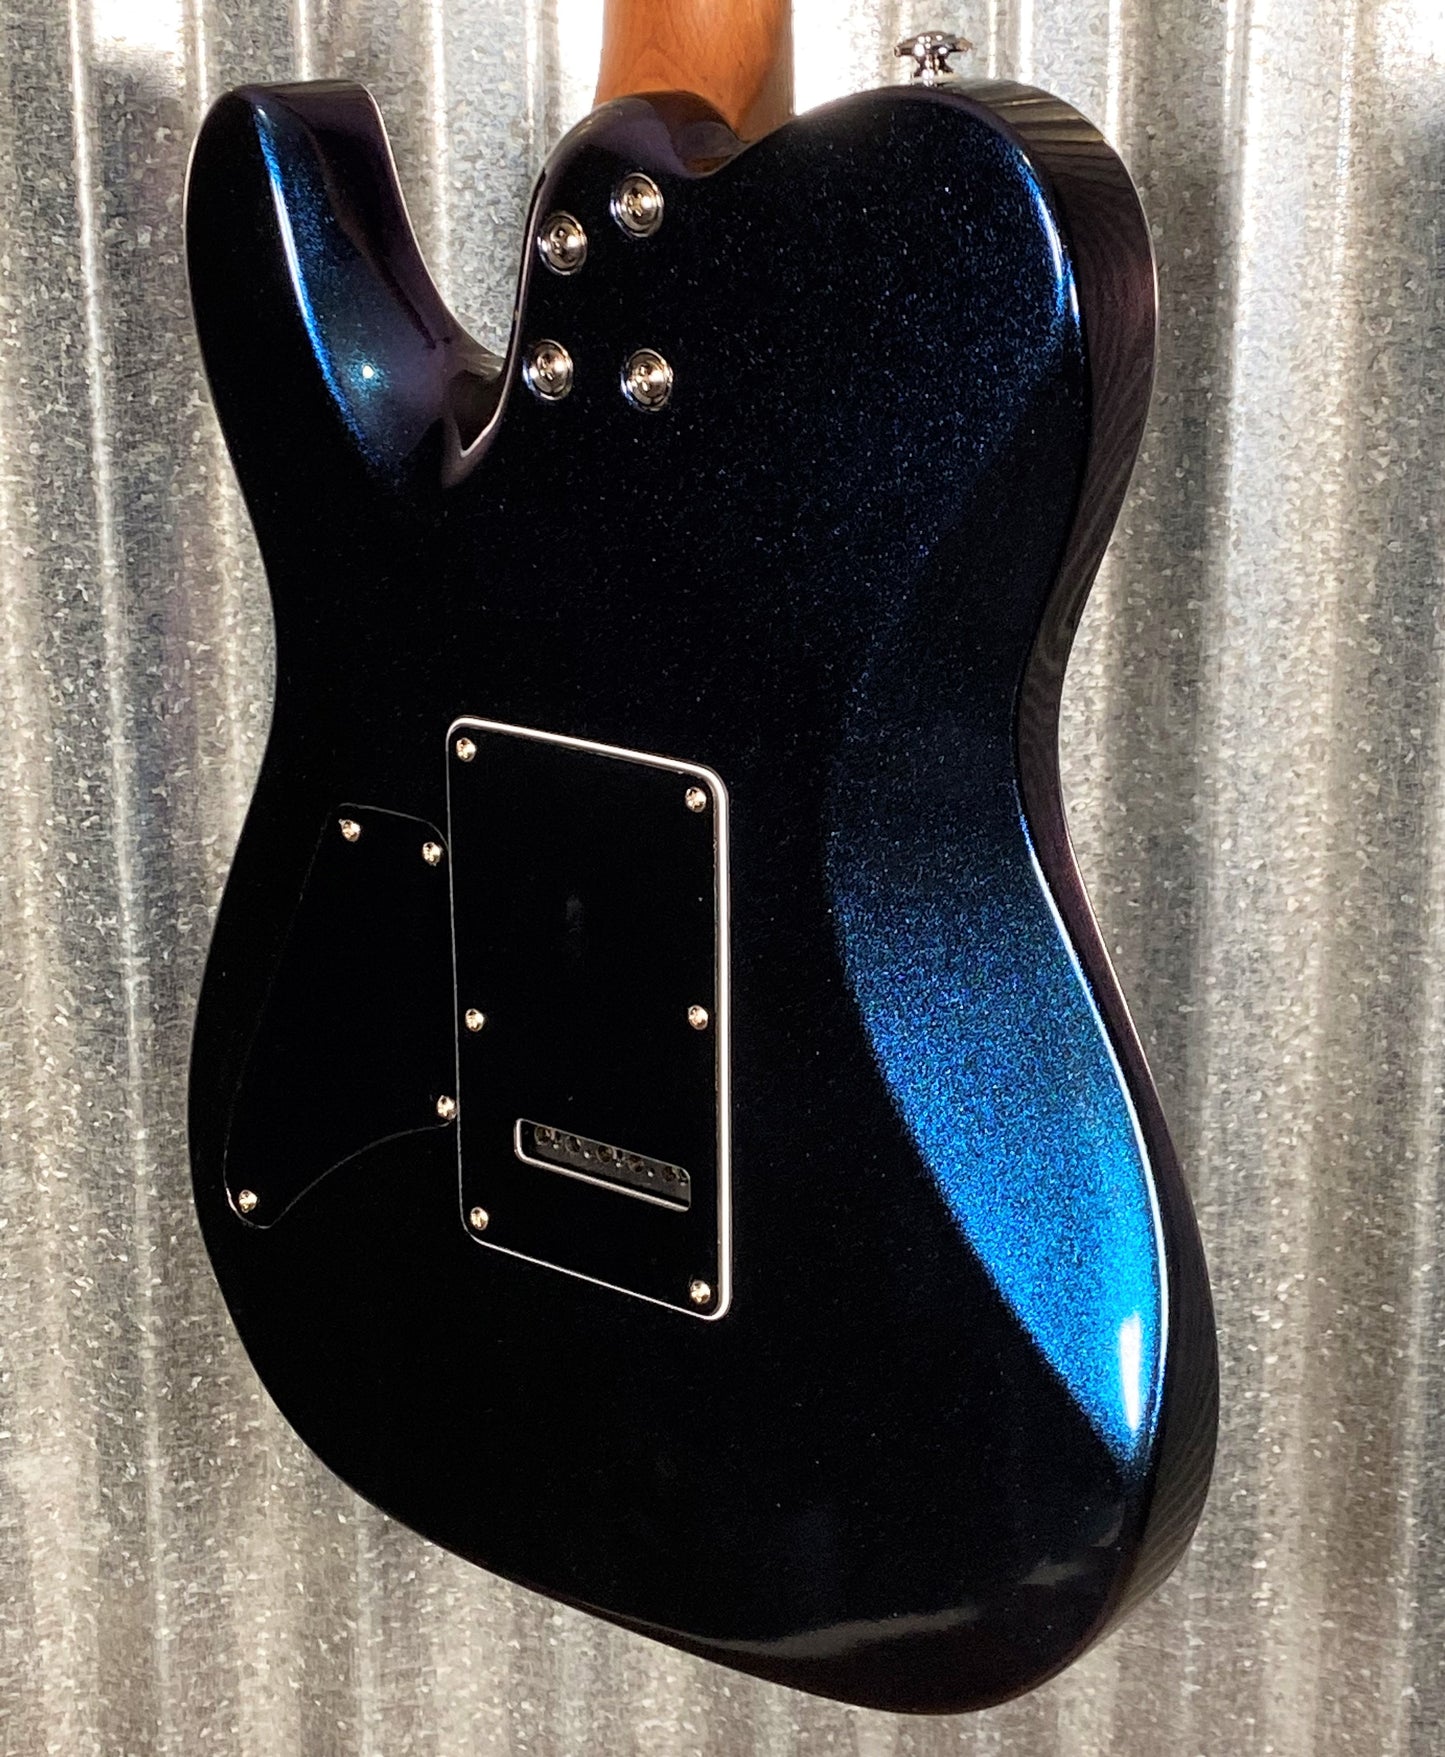 Musi Virgo Fusion Telecaster Deluxe Tremolo Indigo Blue Guitar #0045 Used